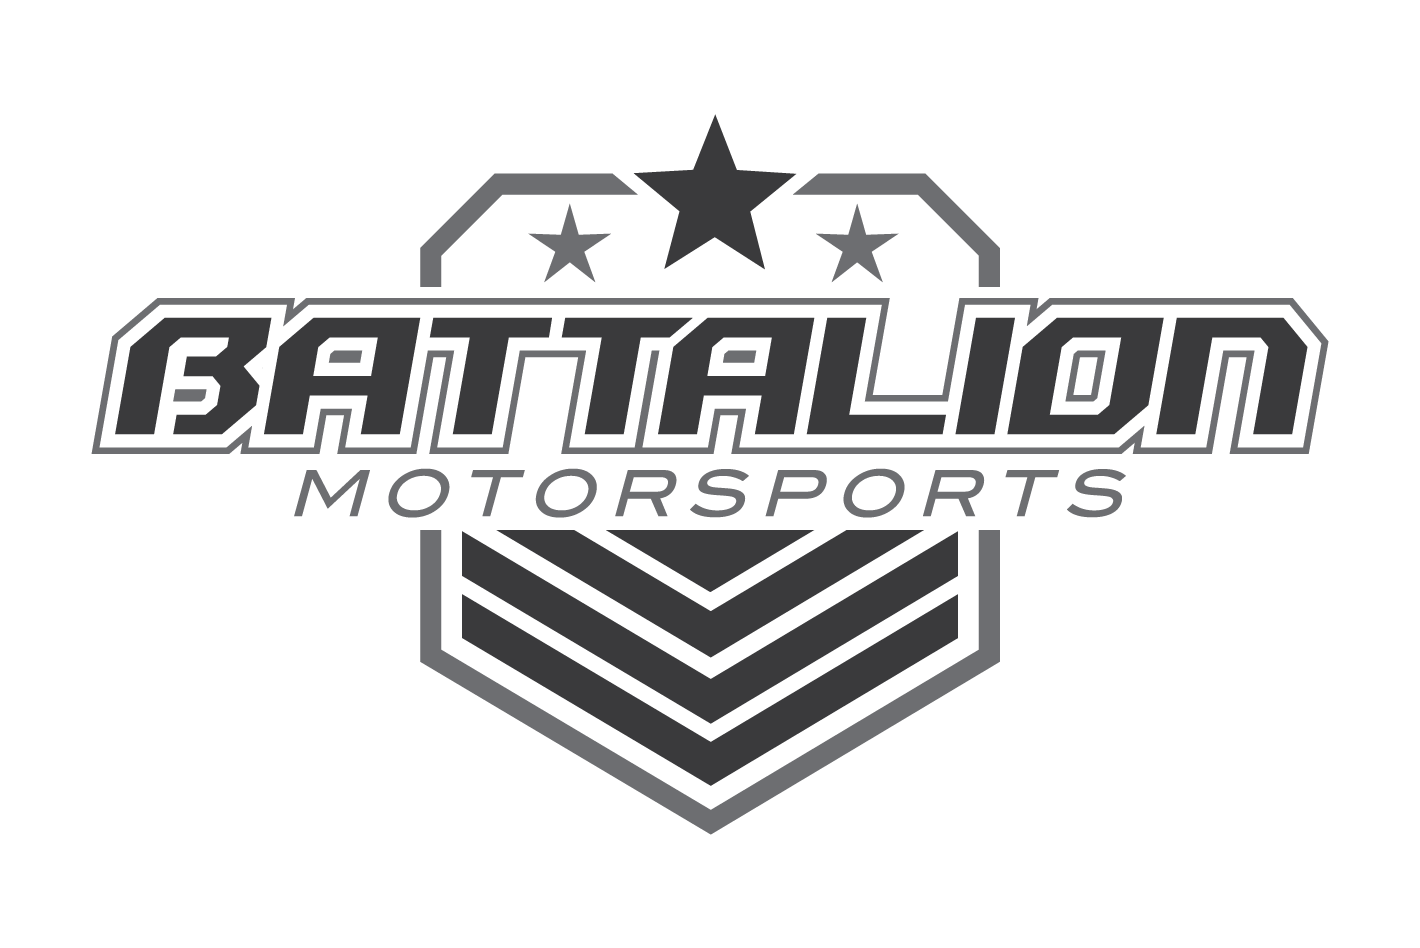 Battalion Motorsports